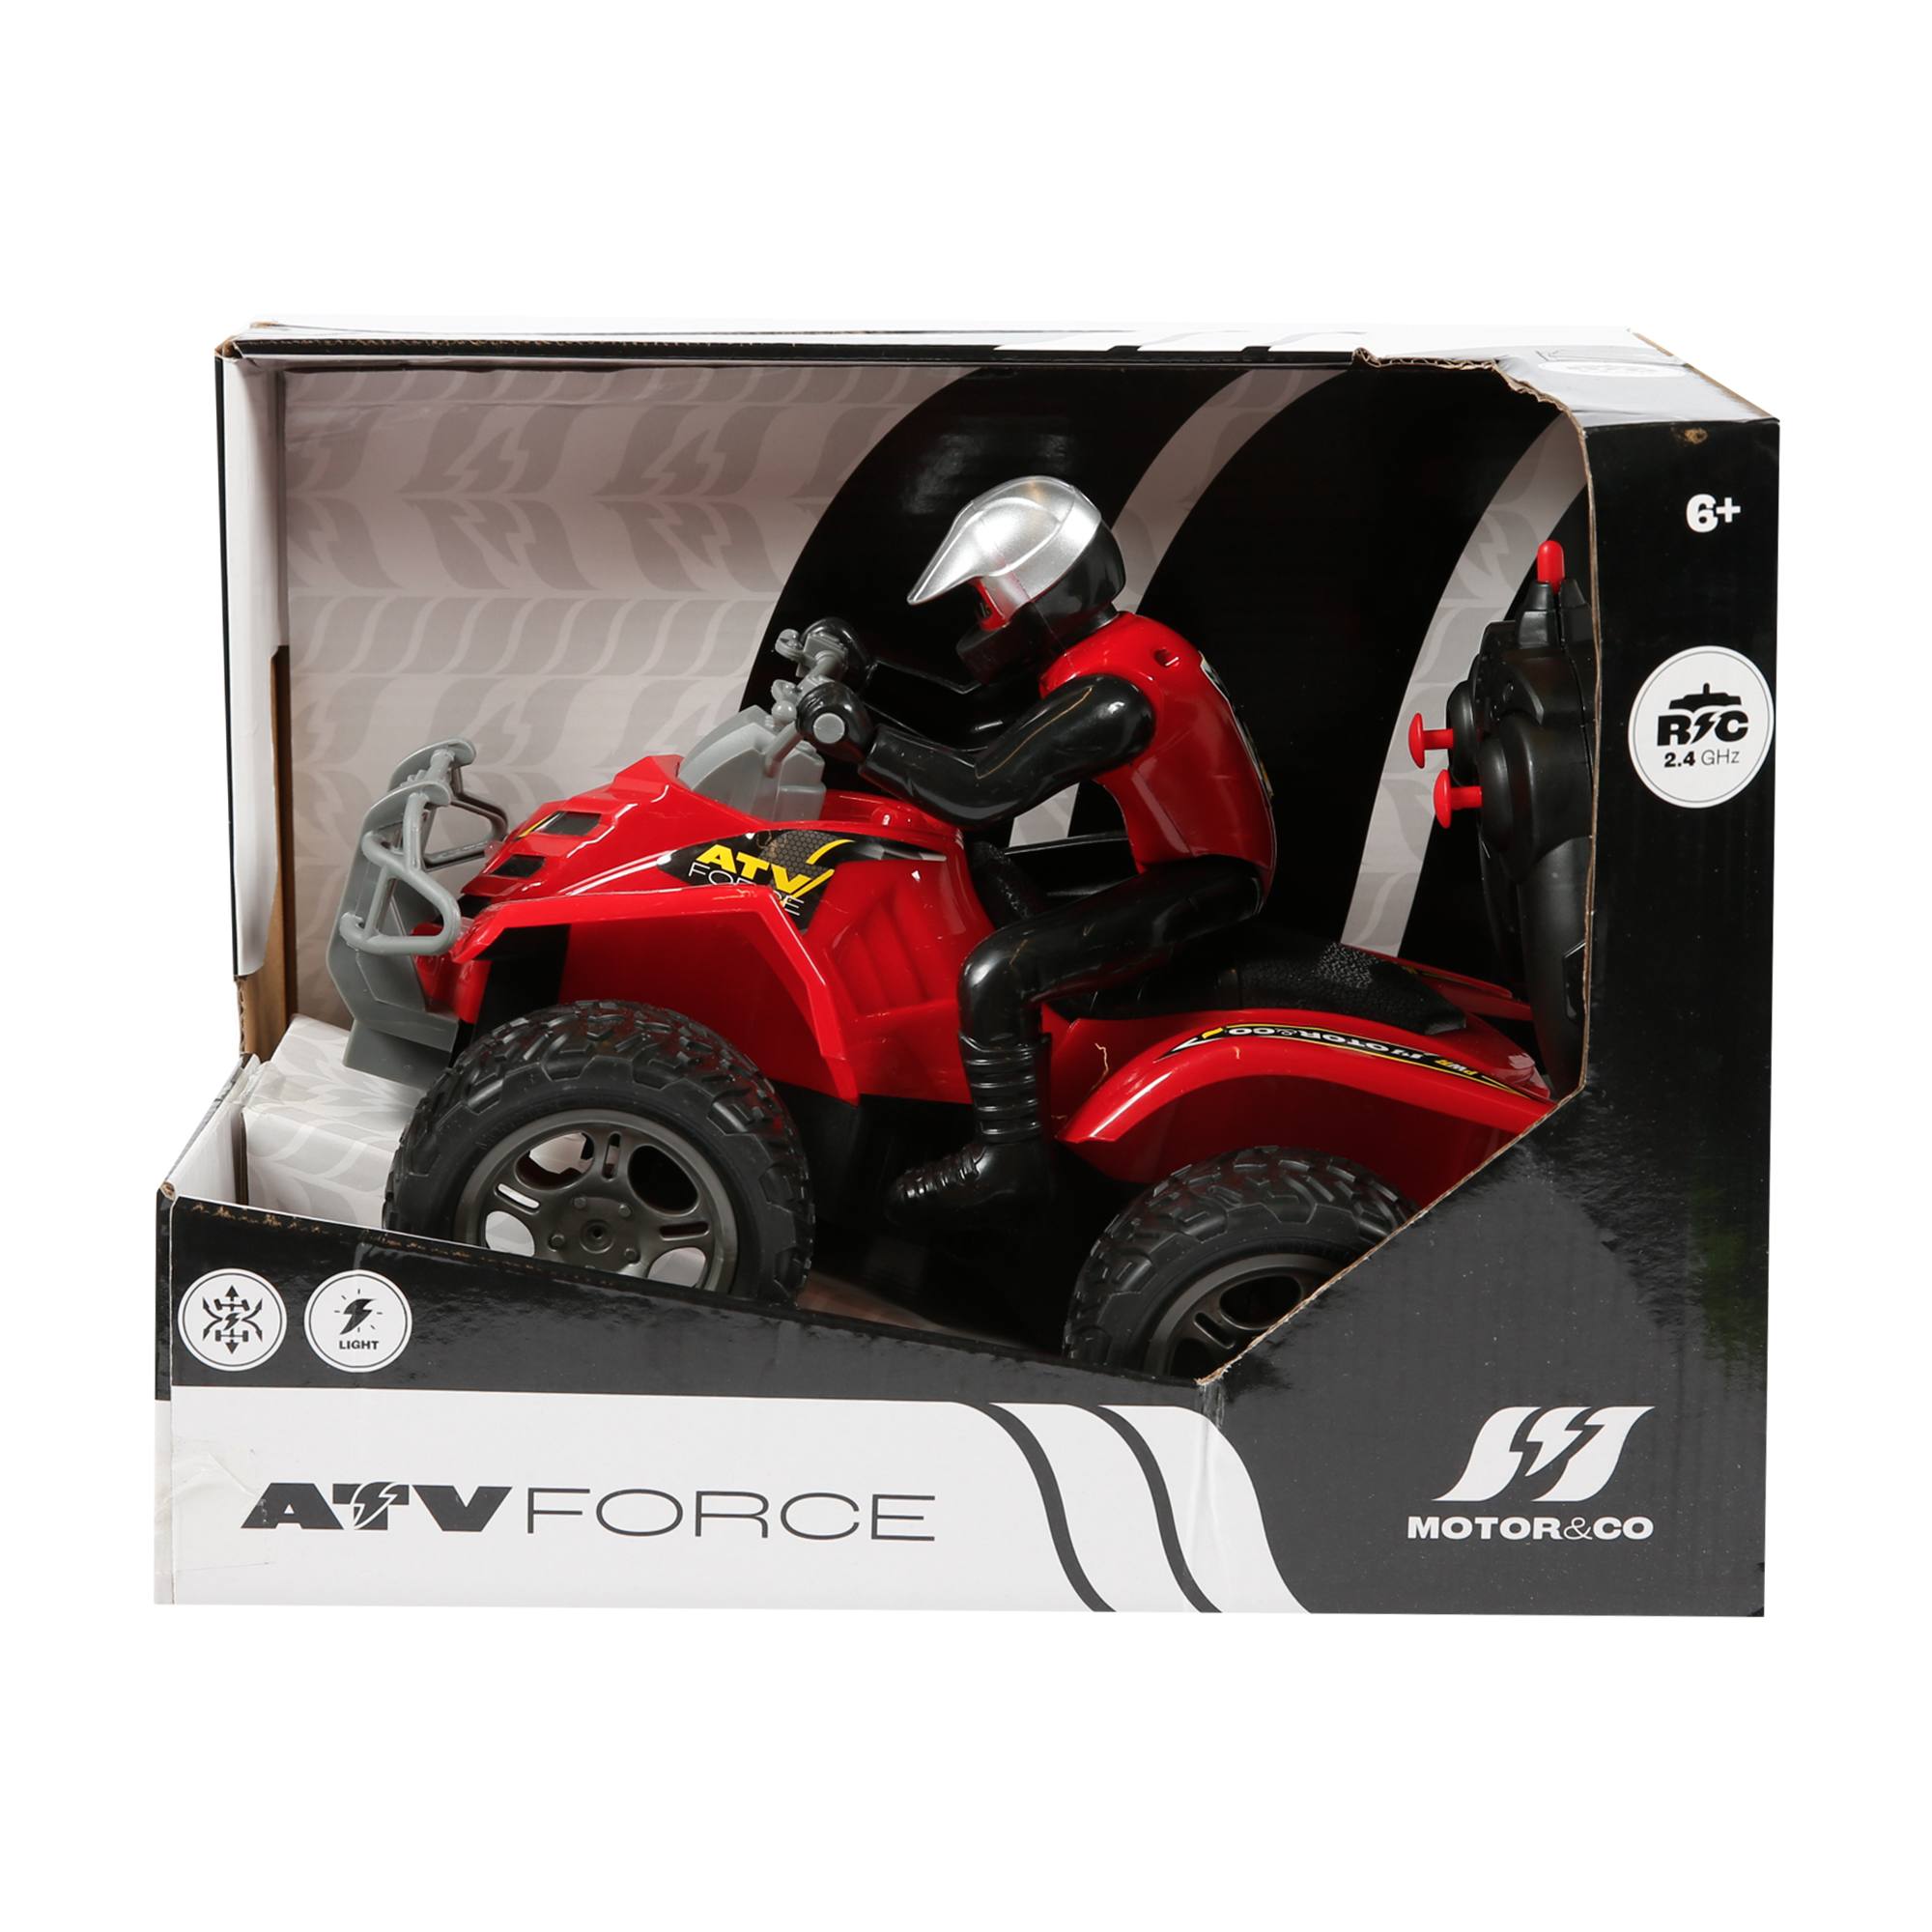 Atv force - MOTOR & CO.